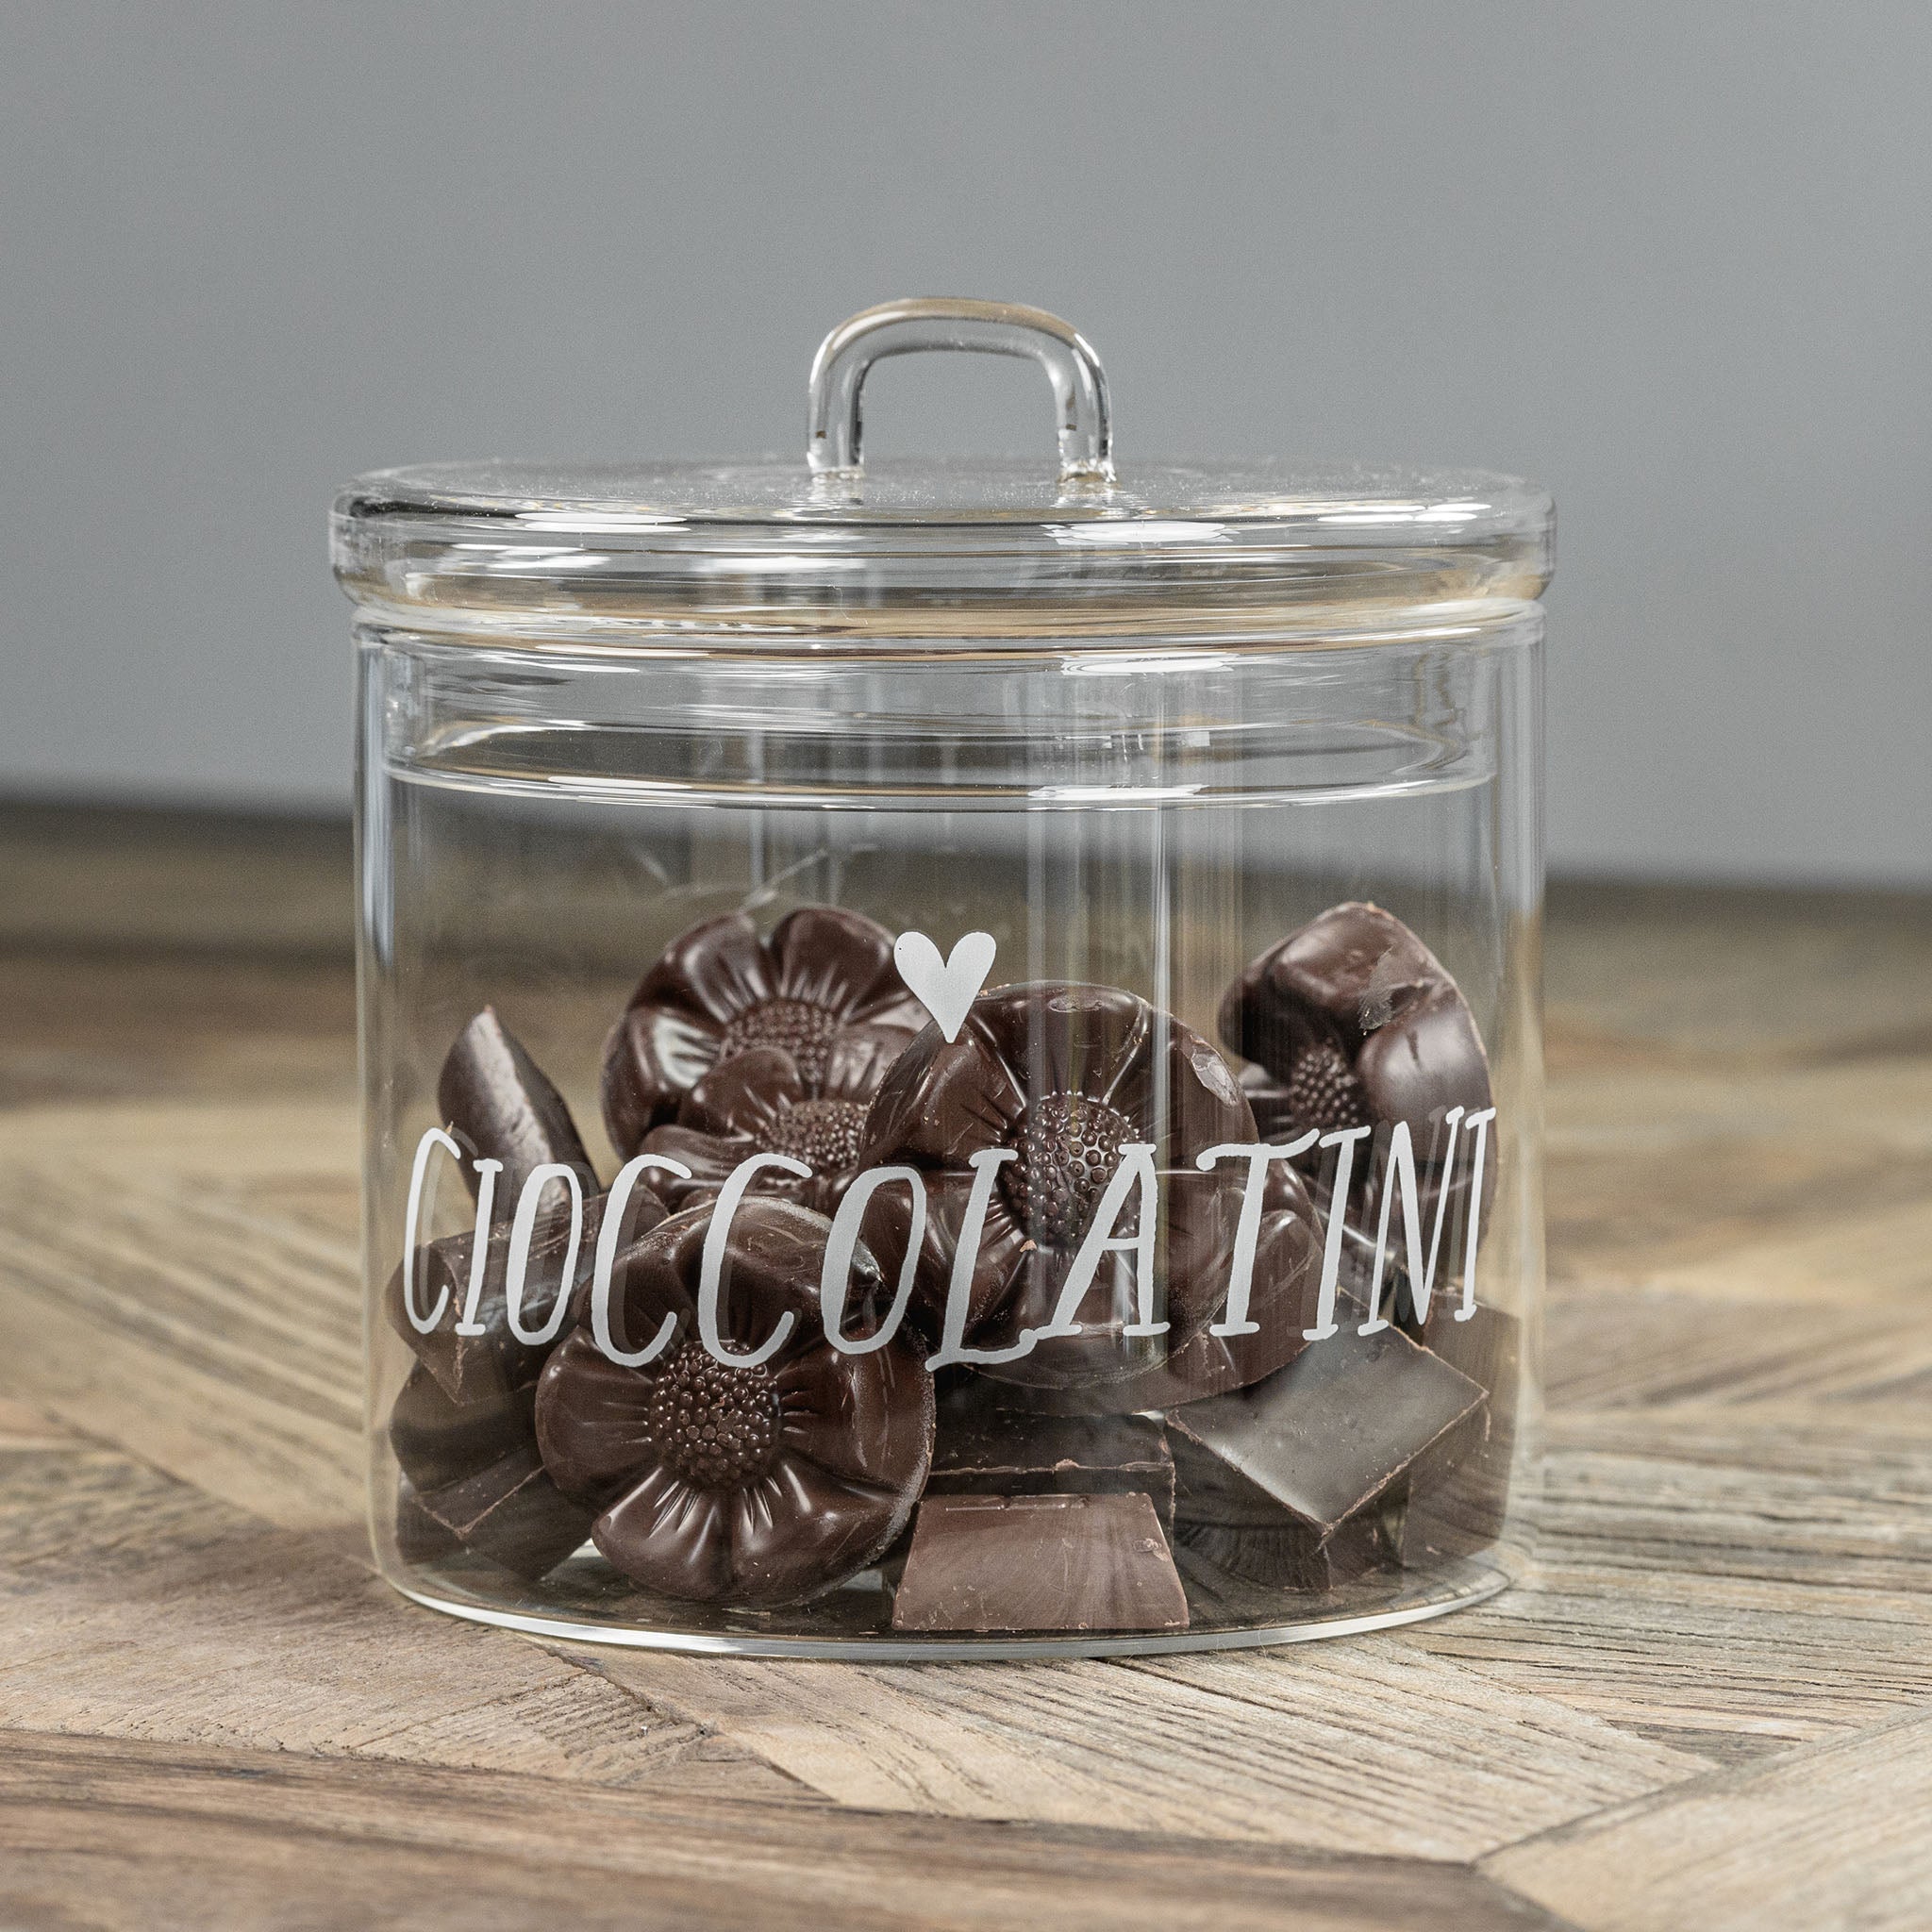 Cioccolatini chocolates Jar